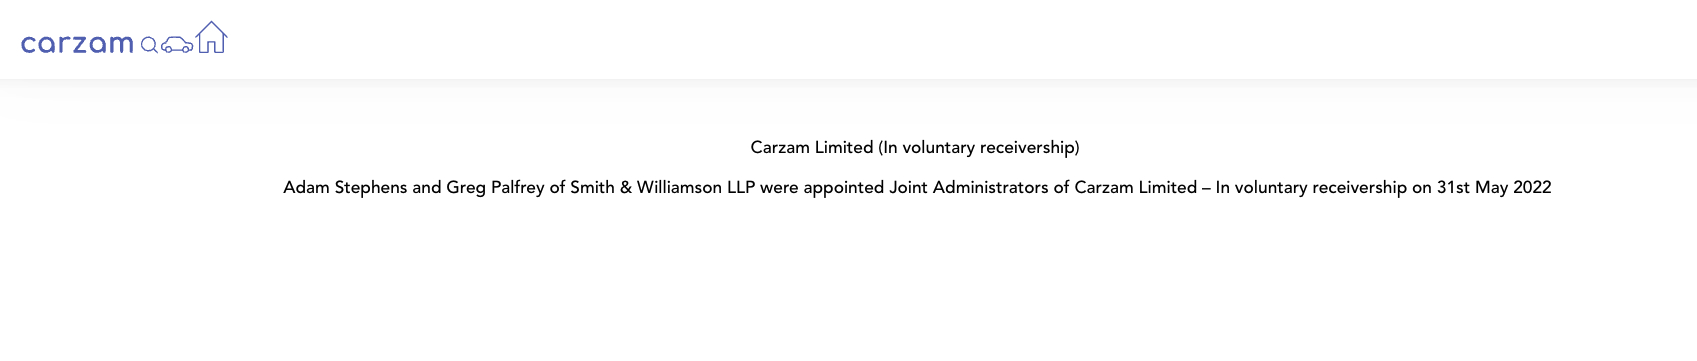 Carzam in receivership